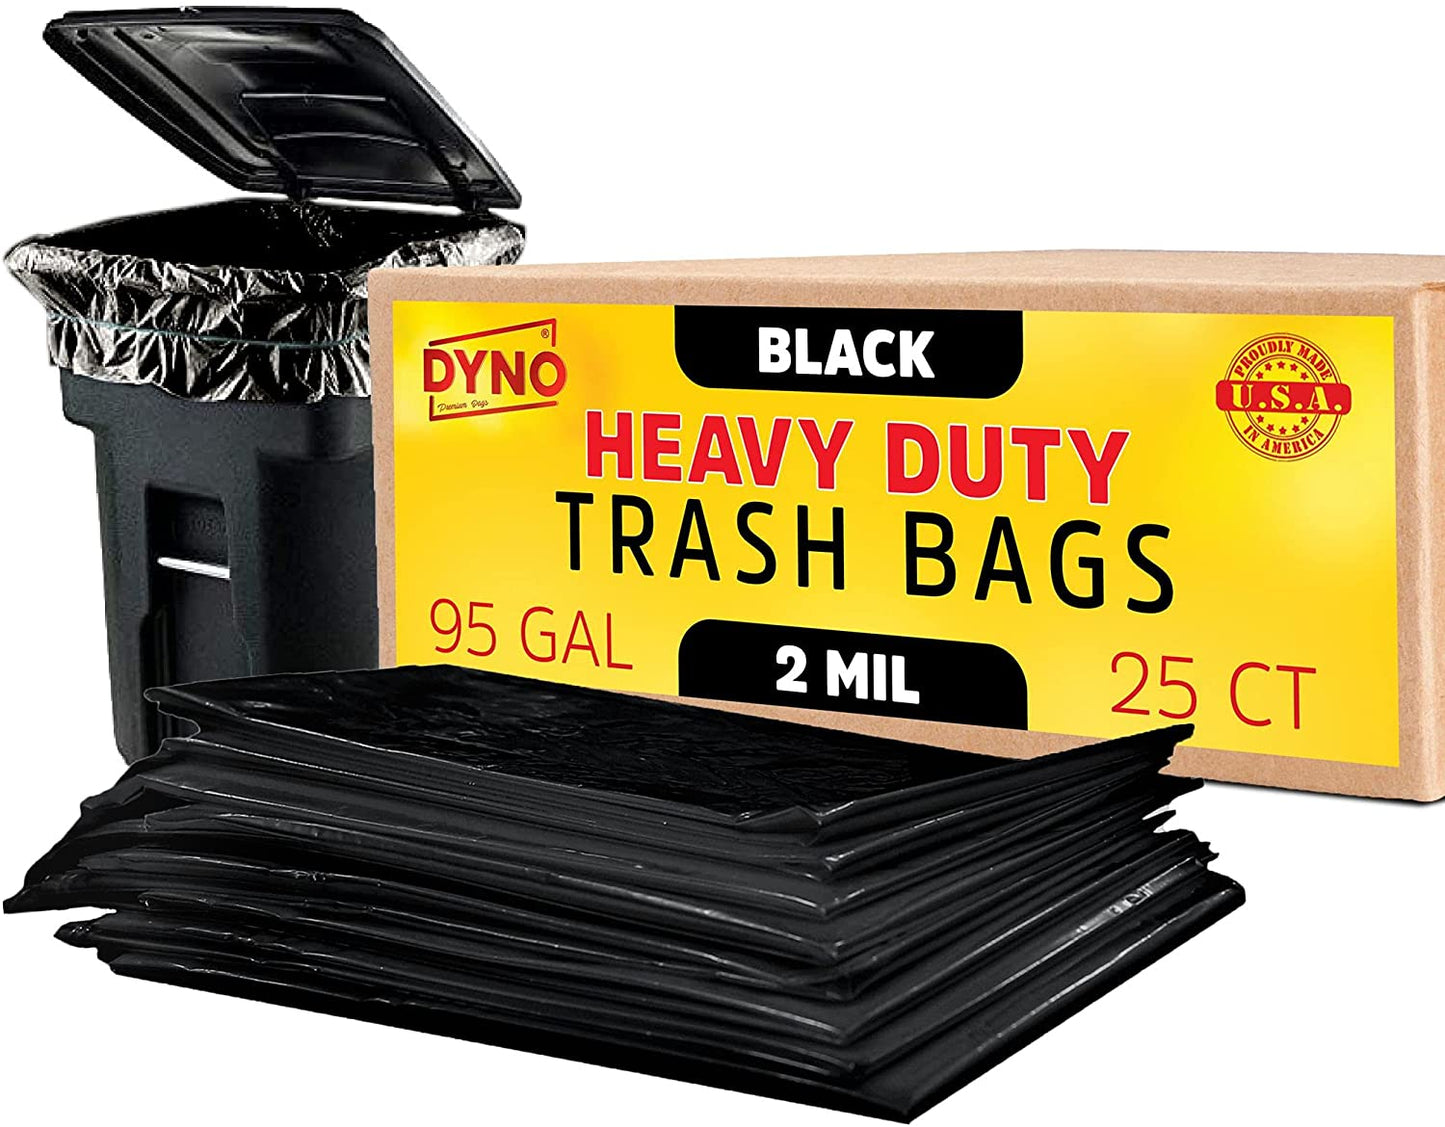 Trash Away Fast Tie Trash Bags (25 ct, 30 Gallons) - Black